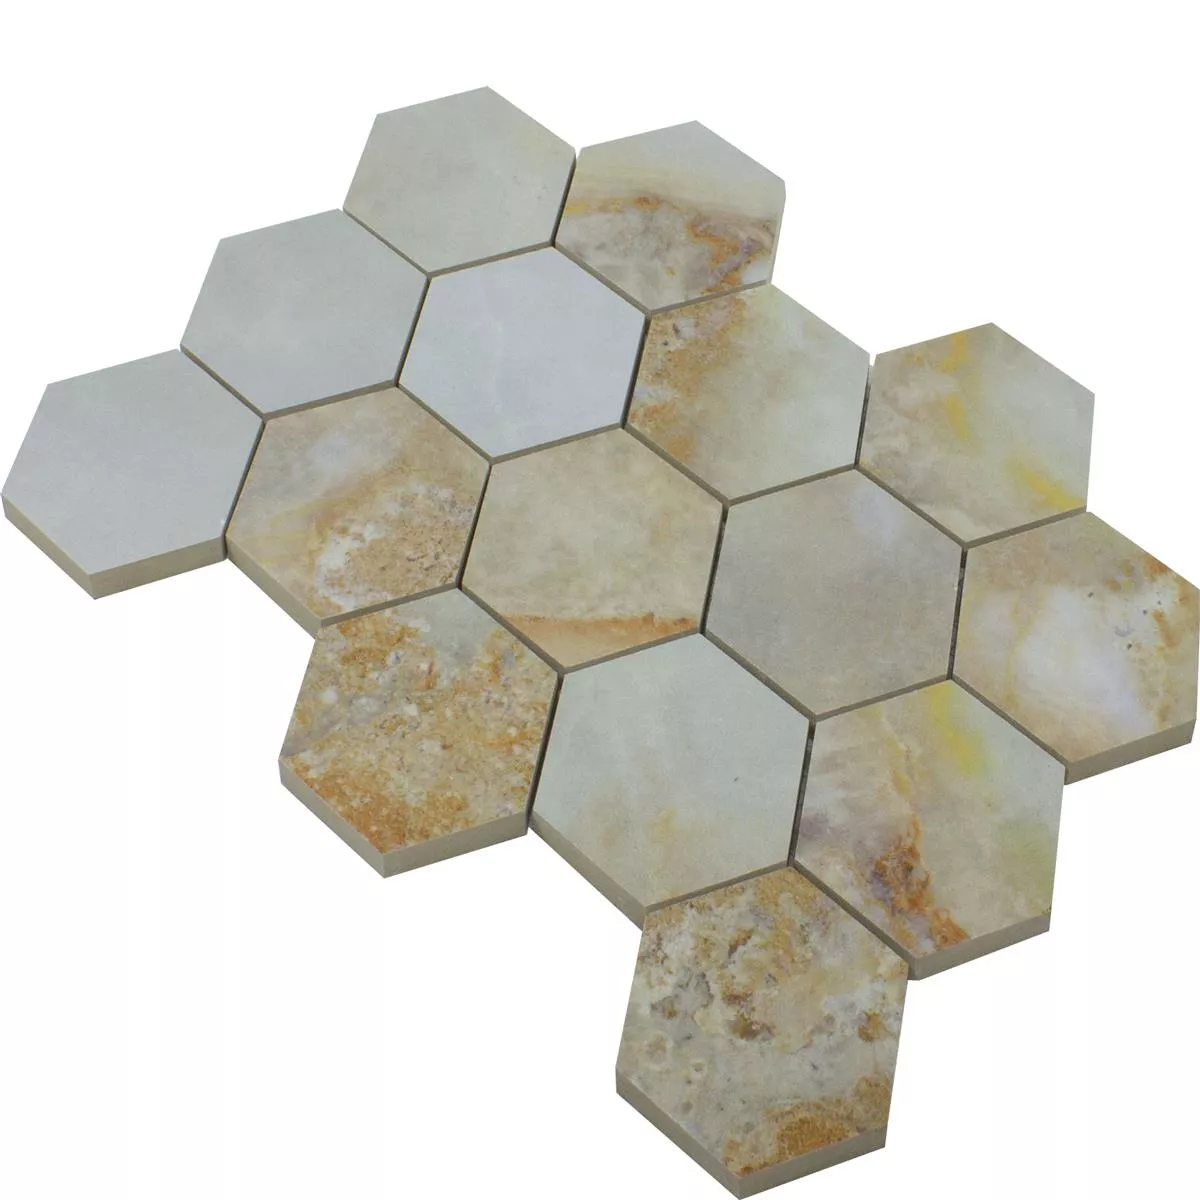 Keramikmosaik Fliesen Naftalin Hexagon Braun Weiß